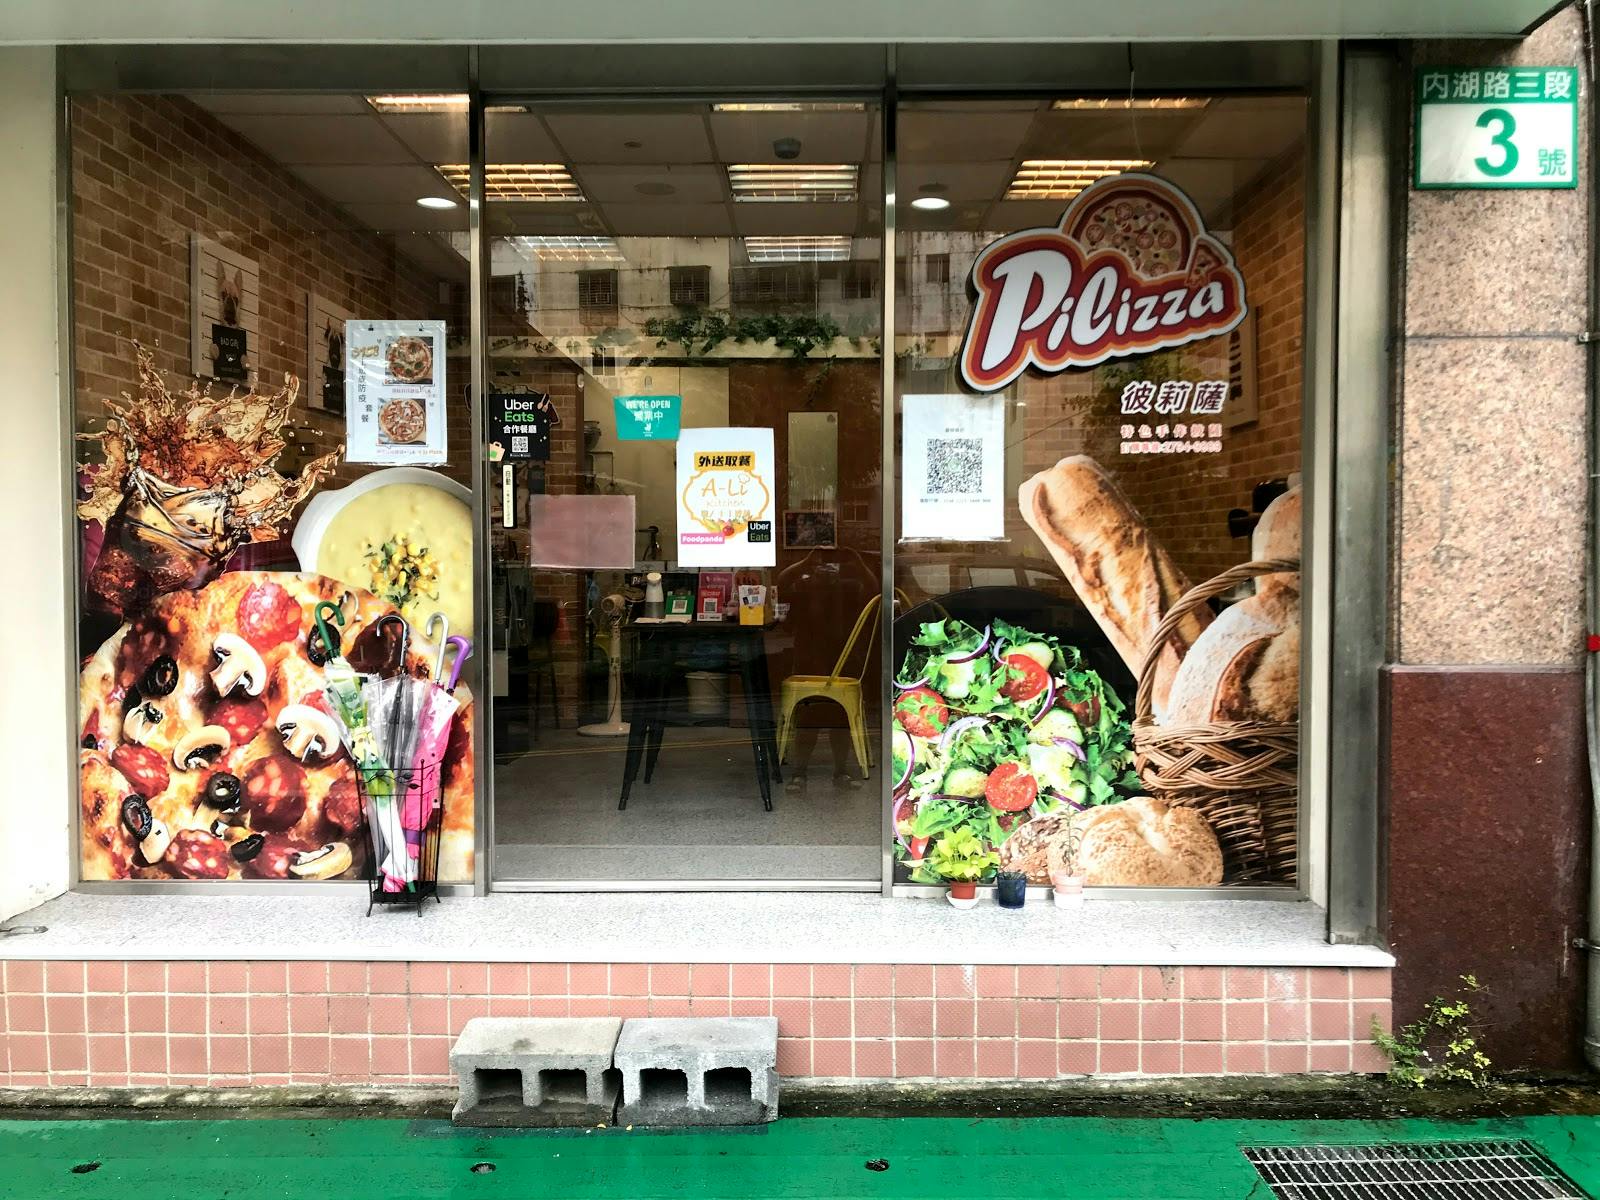 Pilizza 彼莉薩 披薩專賣店